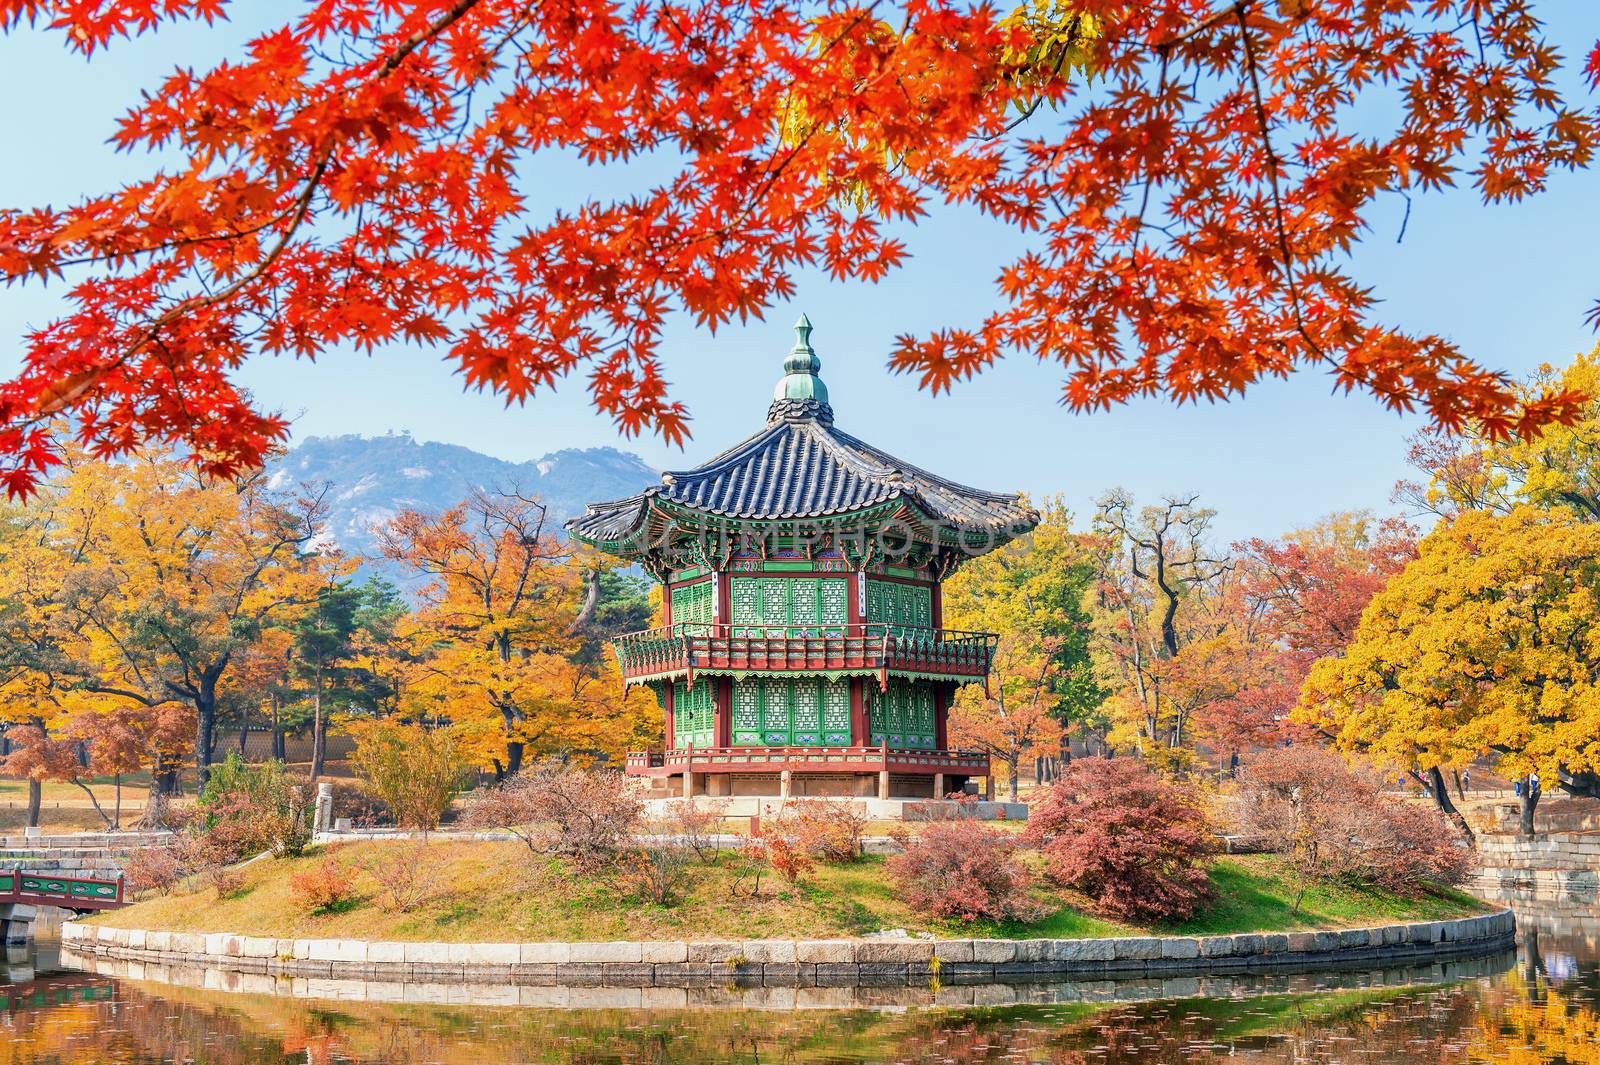 Gyeongbukgung and Maple tree in autumn in korea.